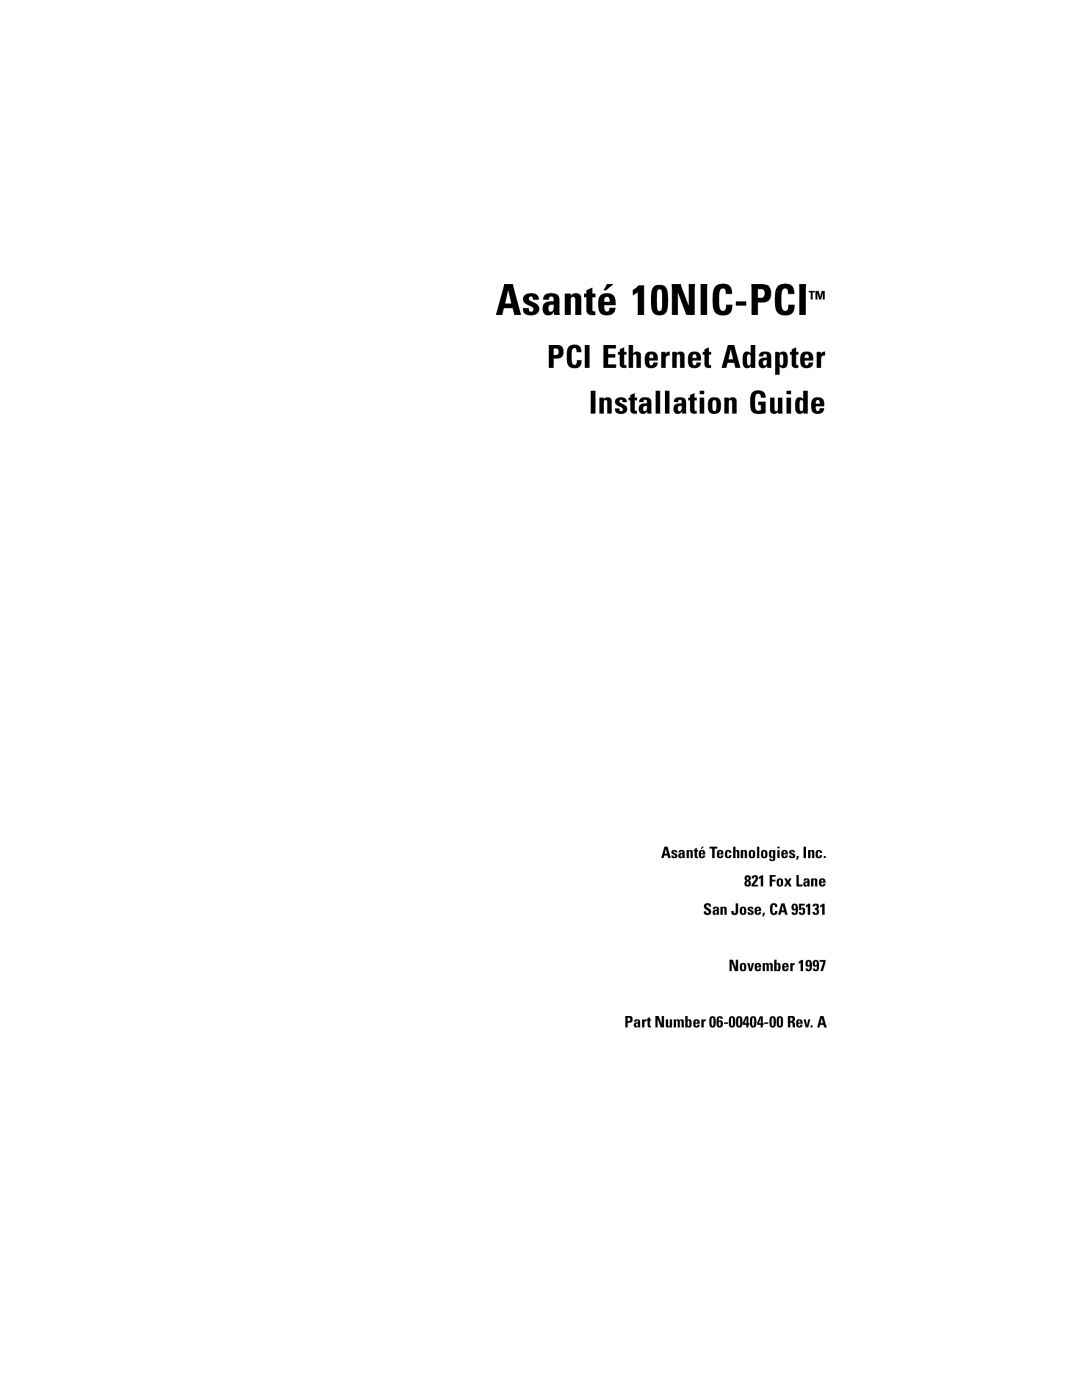 Asante Technologies 10NIC-PCITM manual Asanté 10NIC-PCI, PCI Ethernet Adapter Installation Guide 